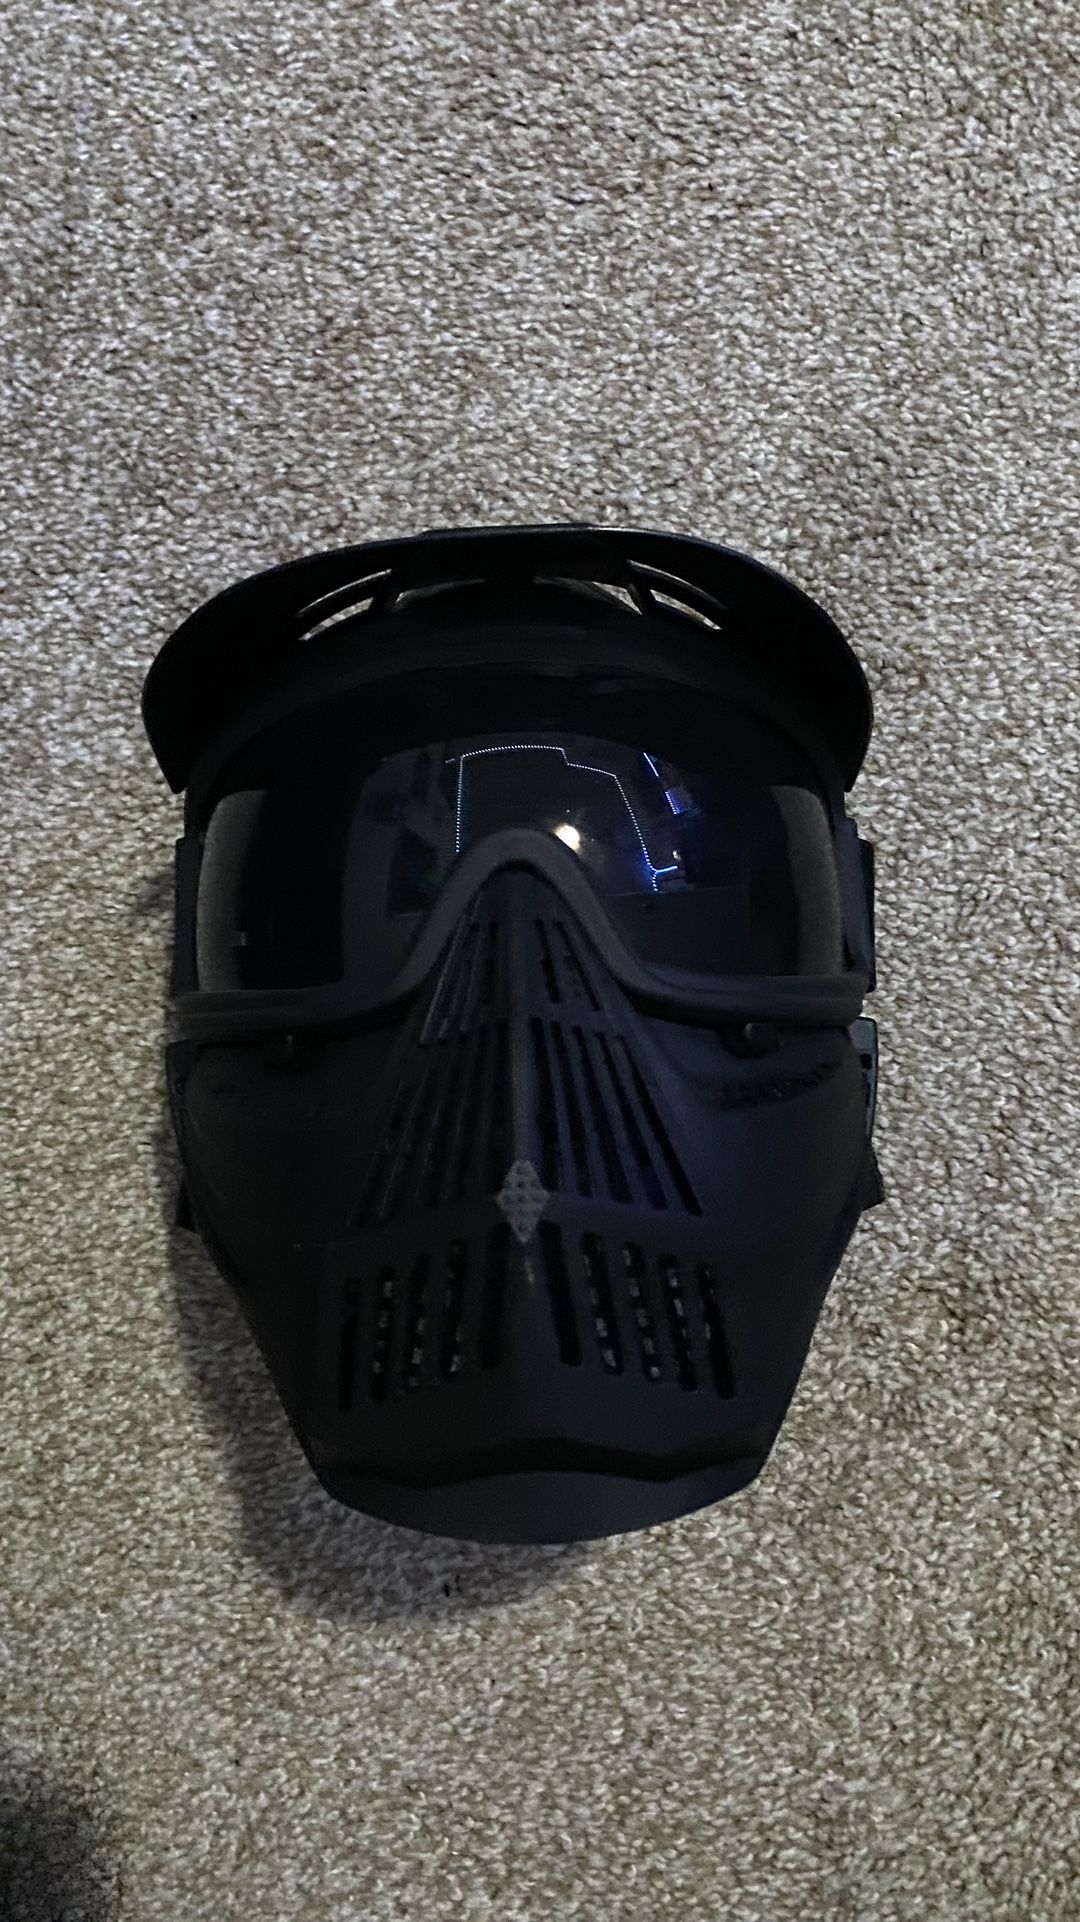 Airsoft mask